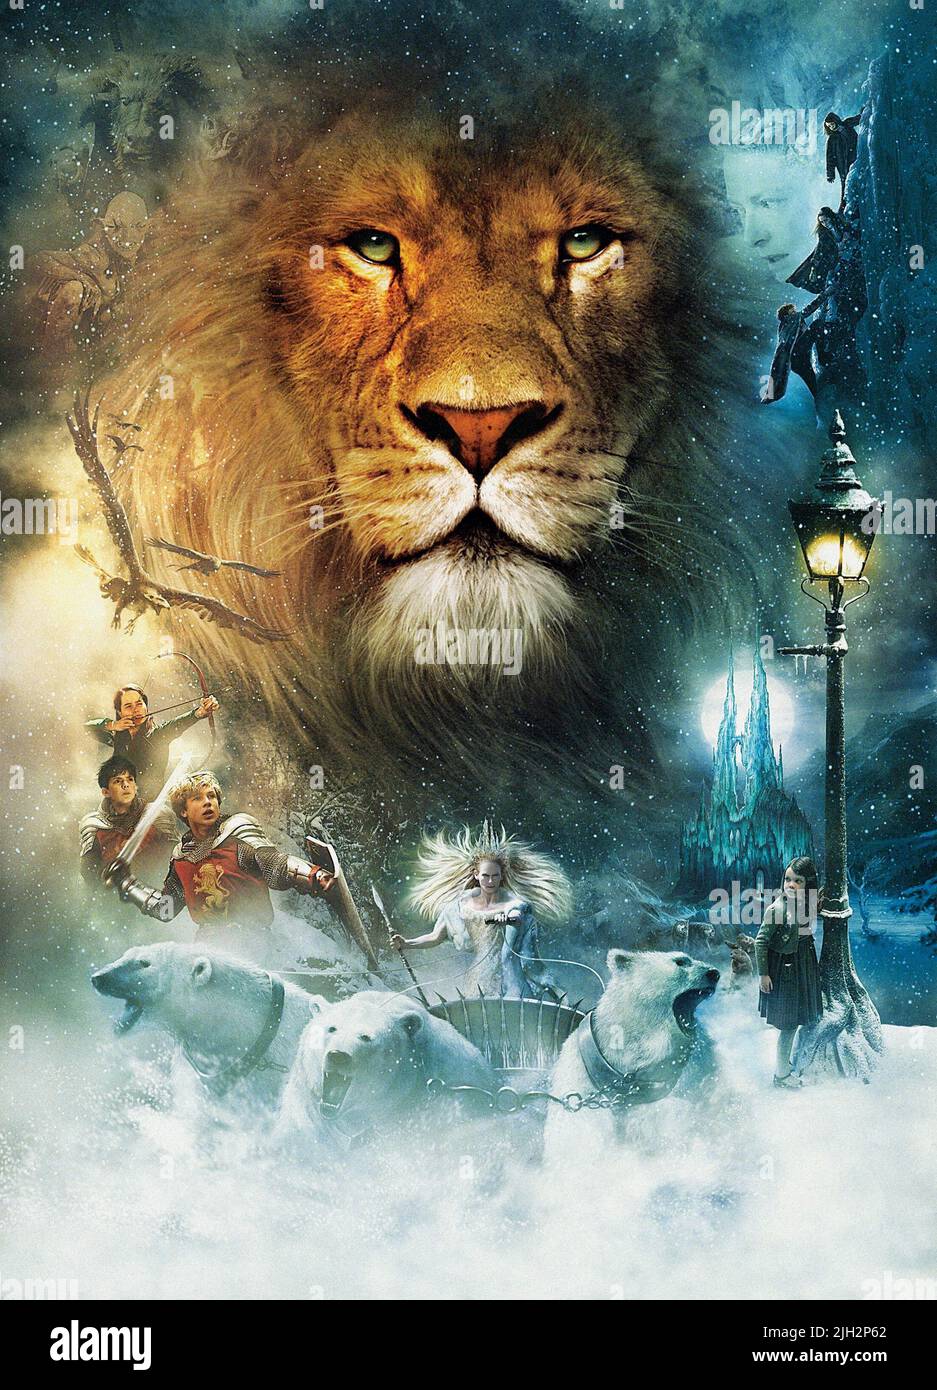 Chronicles of Narnia - Aslan Portrait